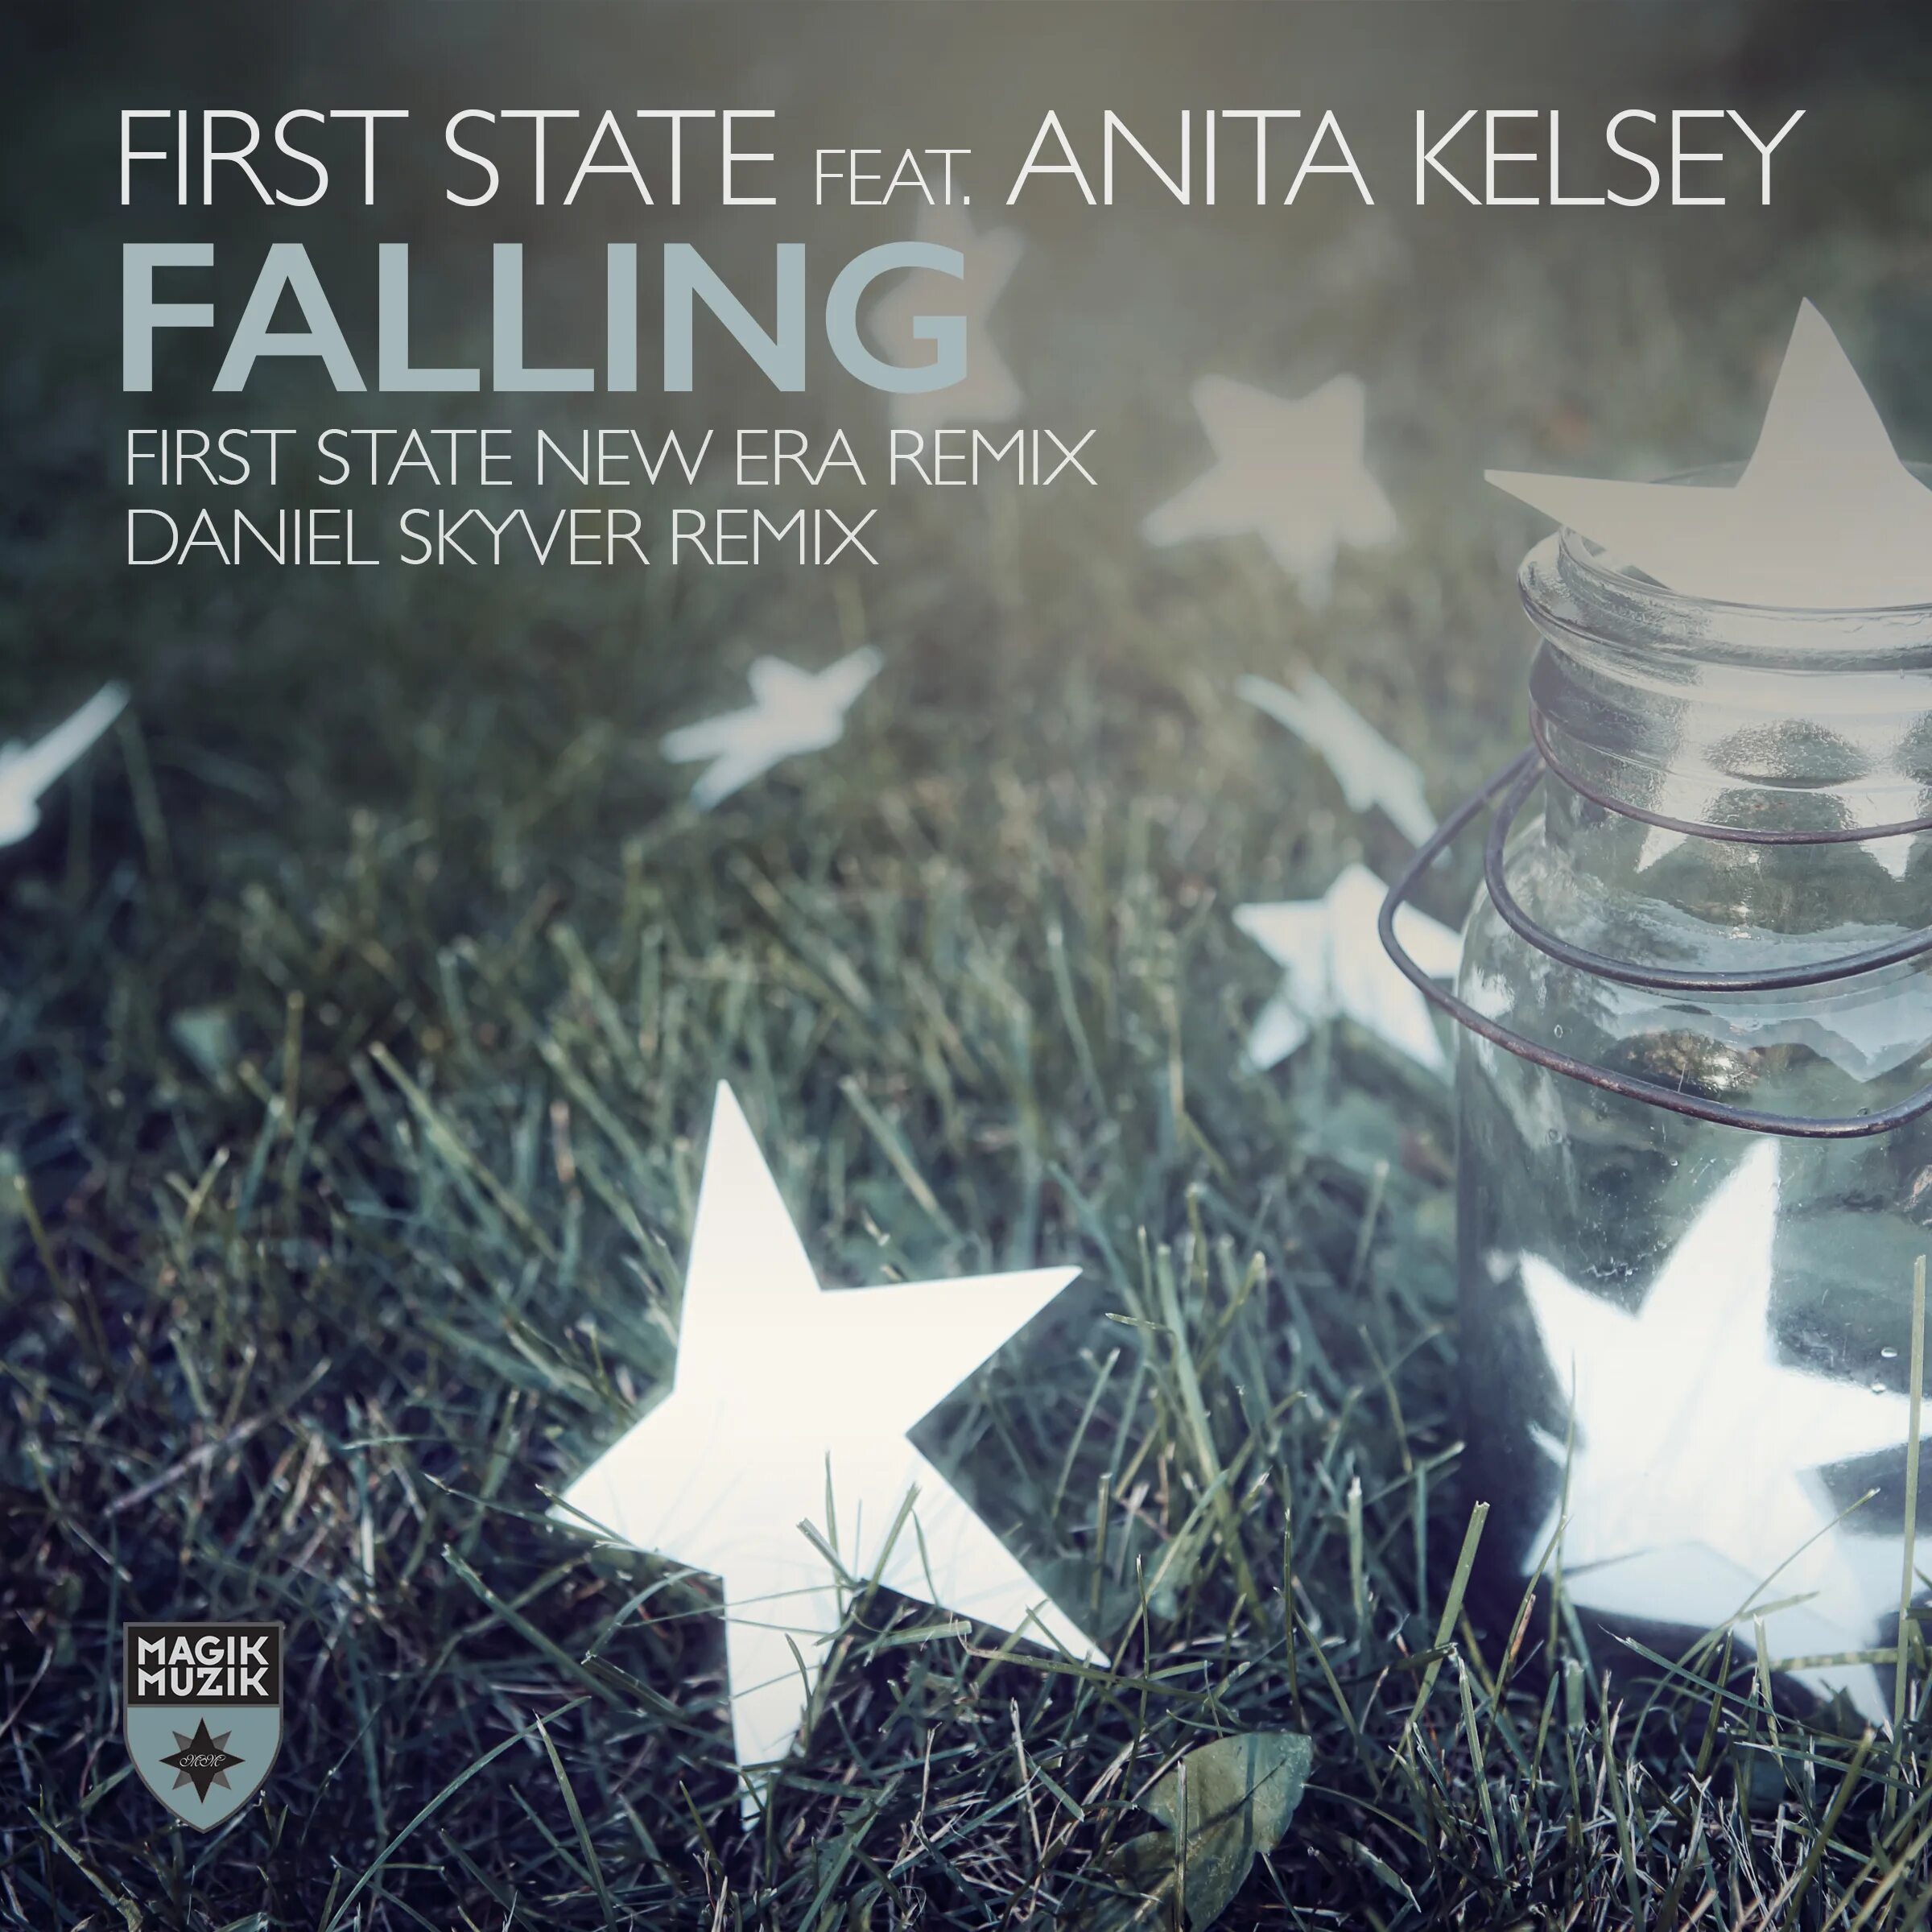 First State feat. Anita Kelsey - Falling. First State feat. Anita Kelsey - Falling (Daniel Skyver Remix). First State, Anita Kelsey Falling - Craig Connelly Remix. Falling (feat. Blackbear) арт. Falling state